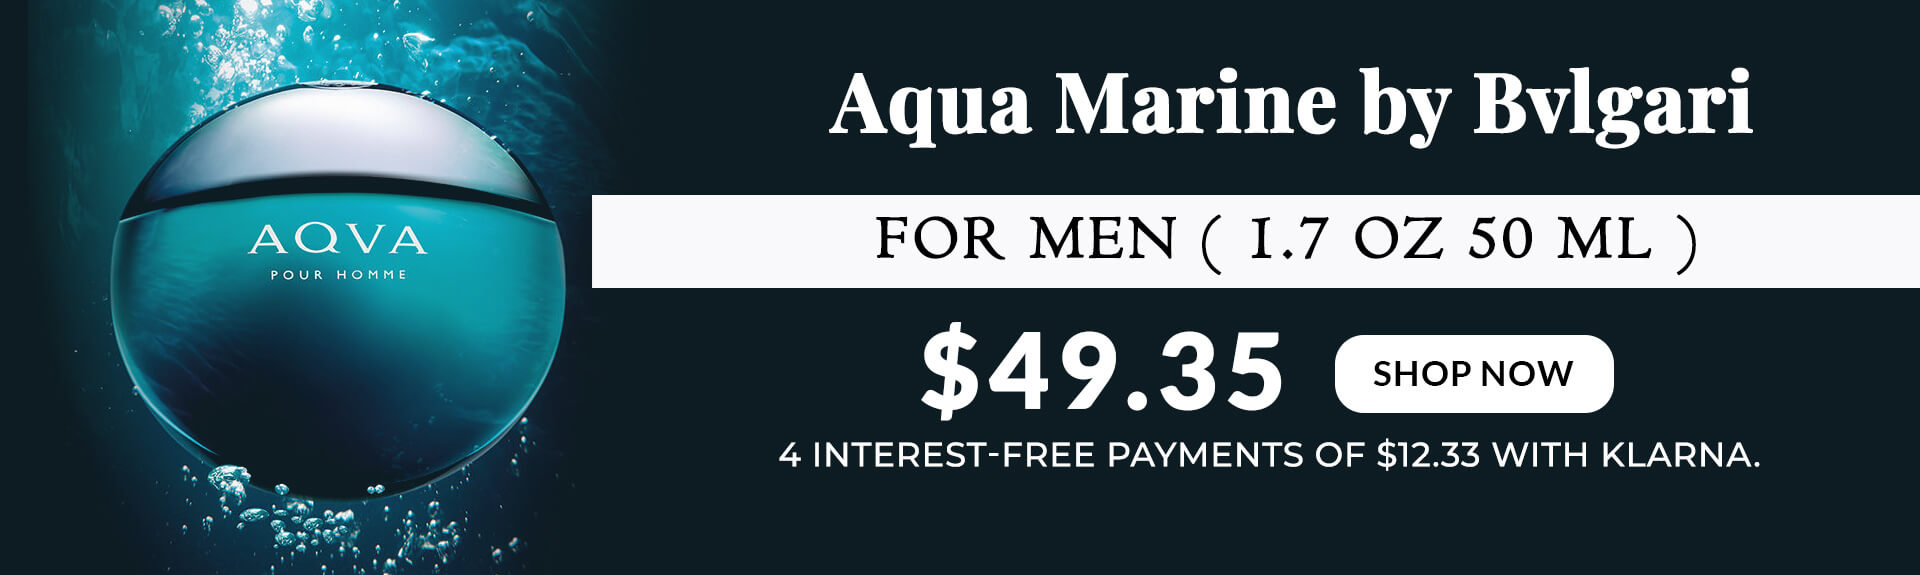 Aqua Marine by Bvlgari for Men